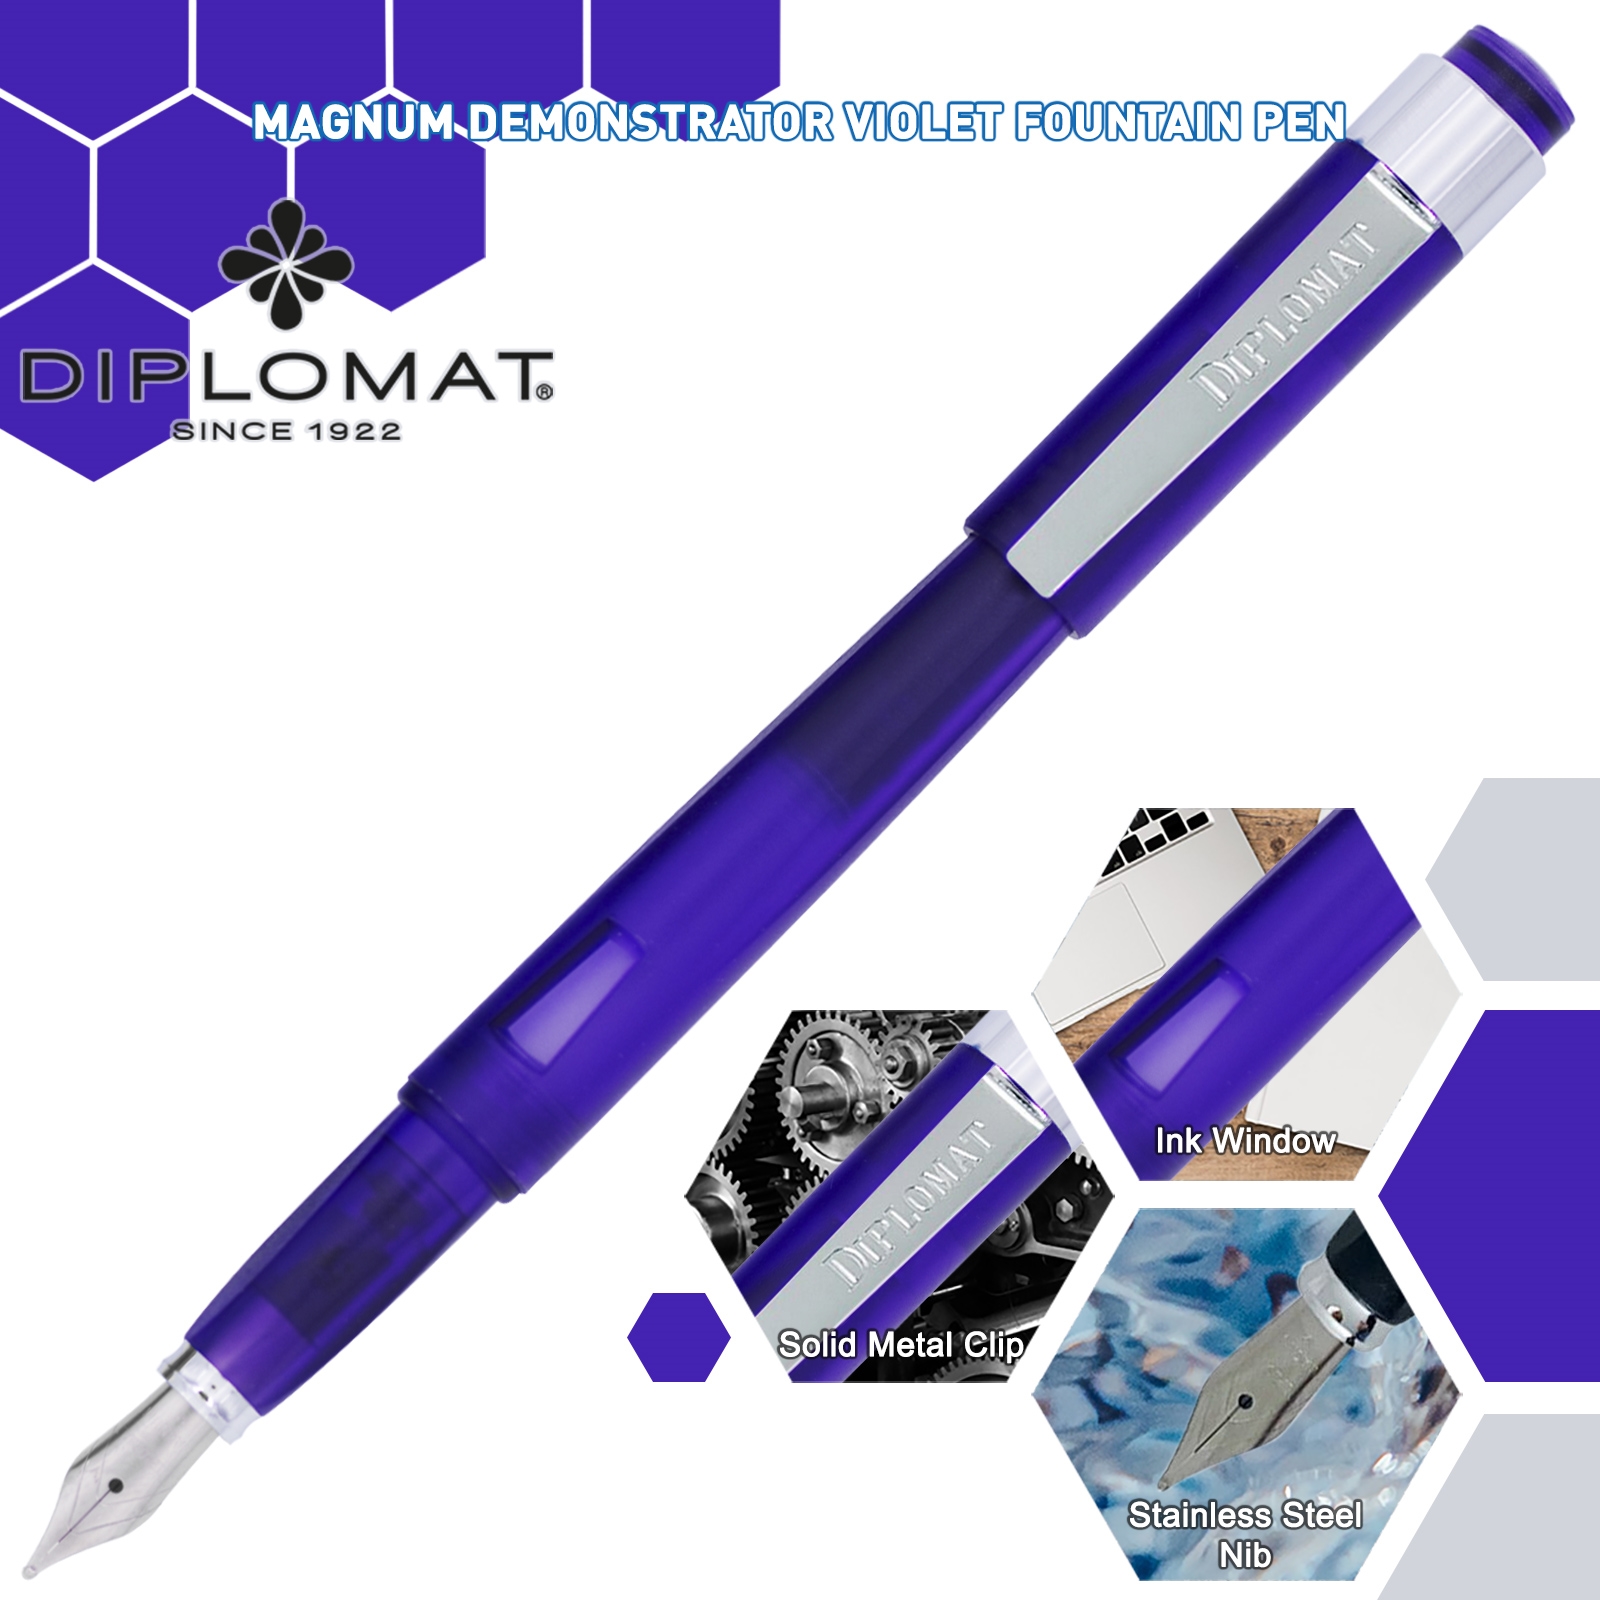 Diplomat Magnum Fountain Pen - Demo Violet by Lanier Pens